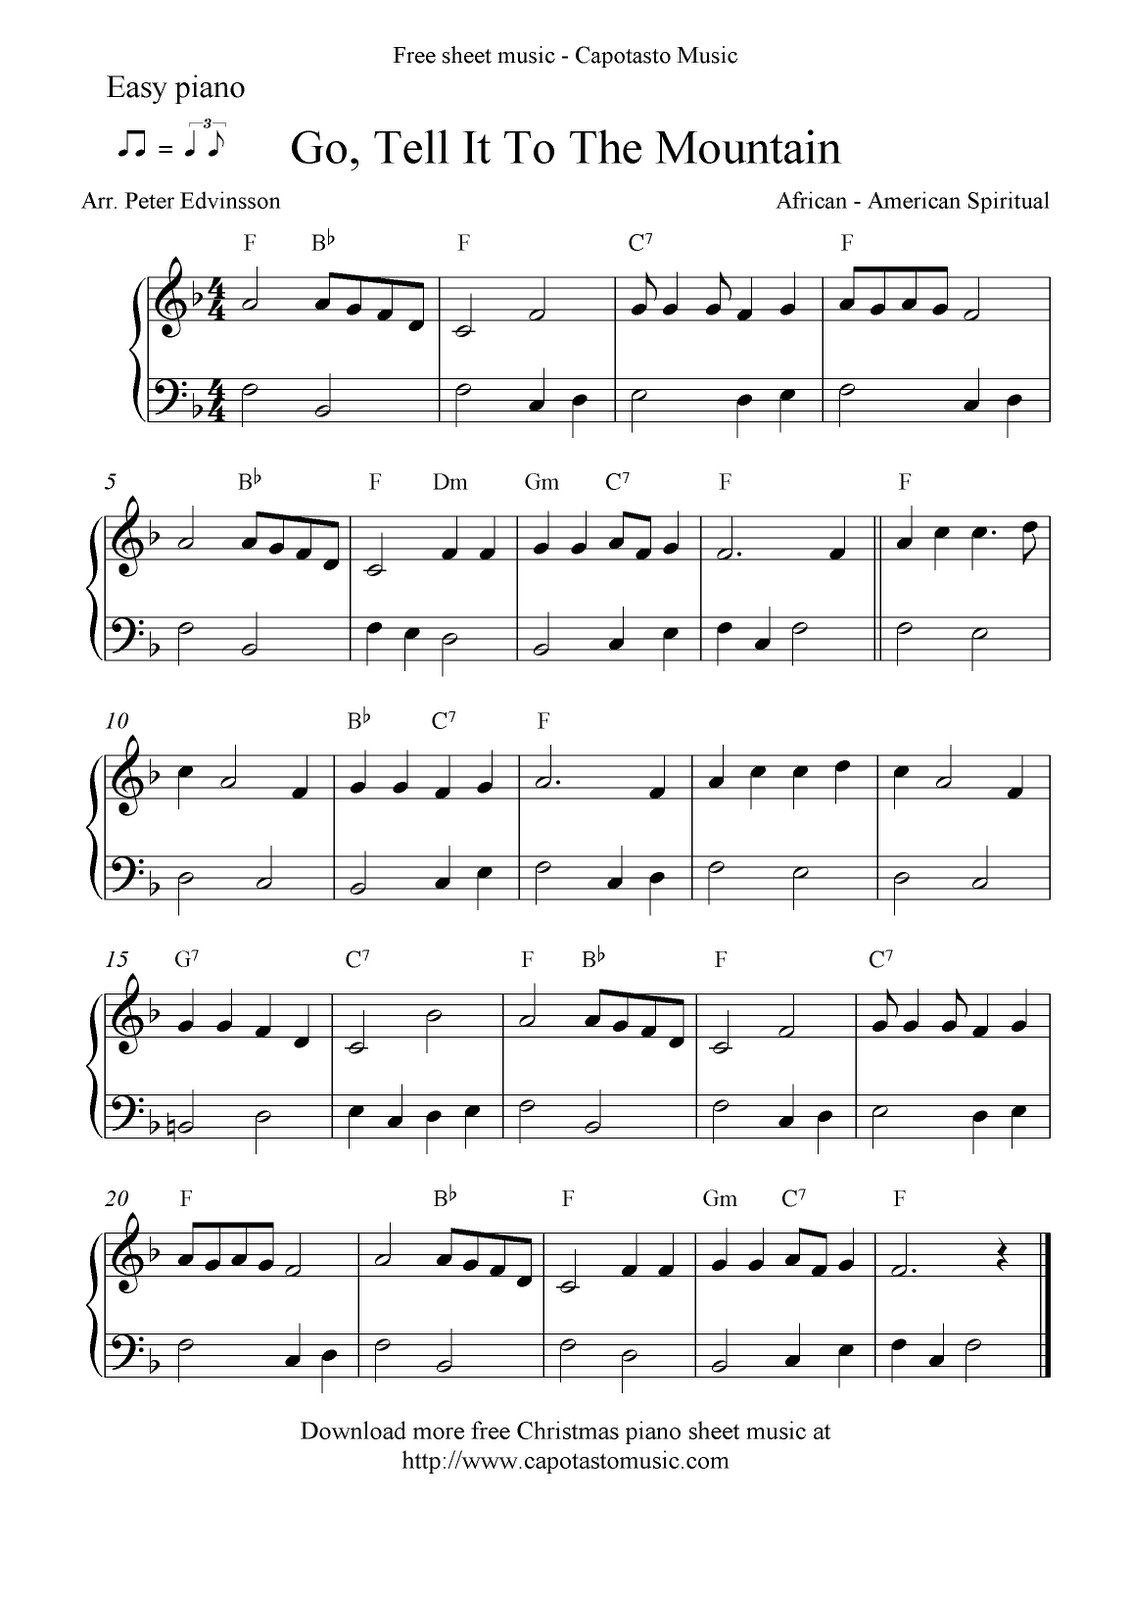 Free Christmas Piano Sheet Music | Easy Notes within Free Christmas Piano Sheet Music For Beginners Printable